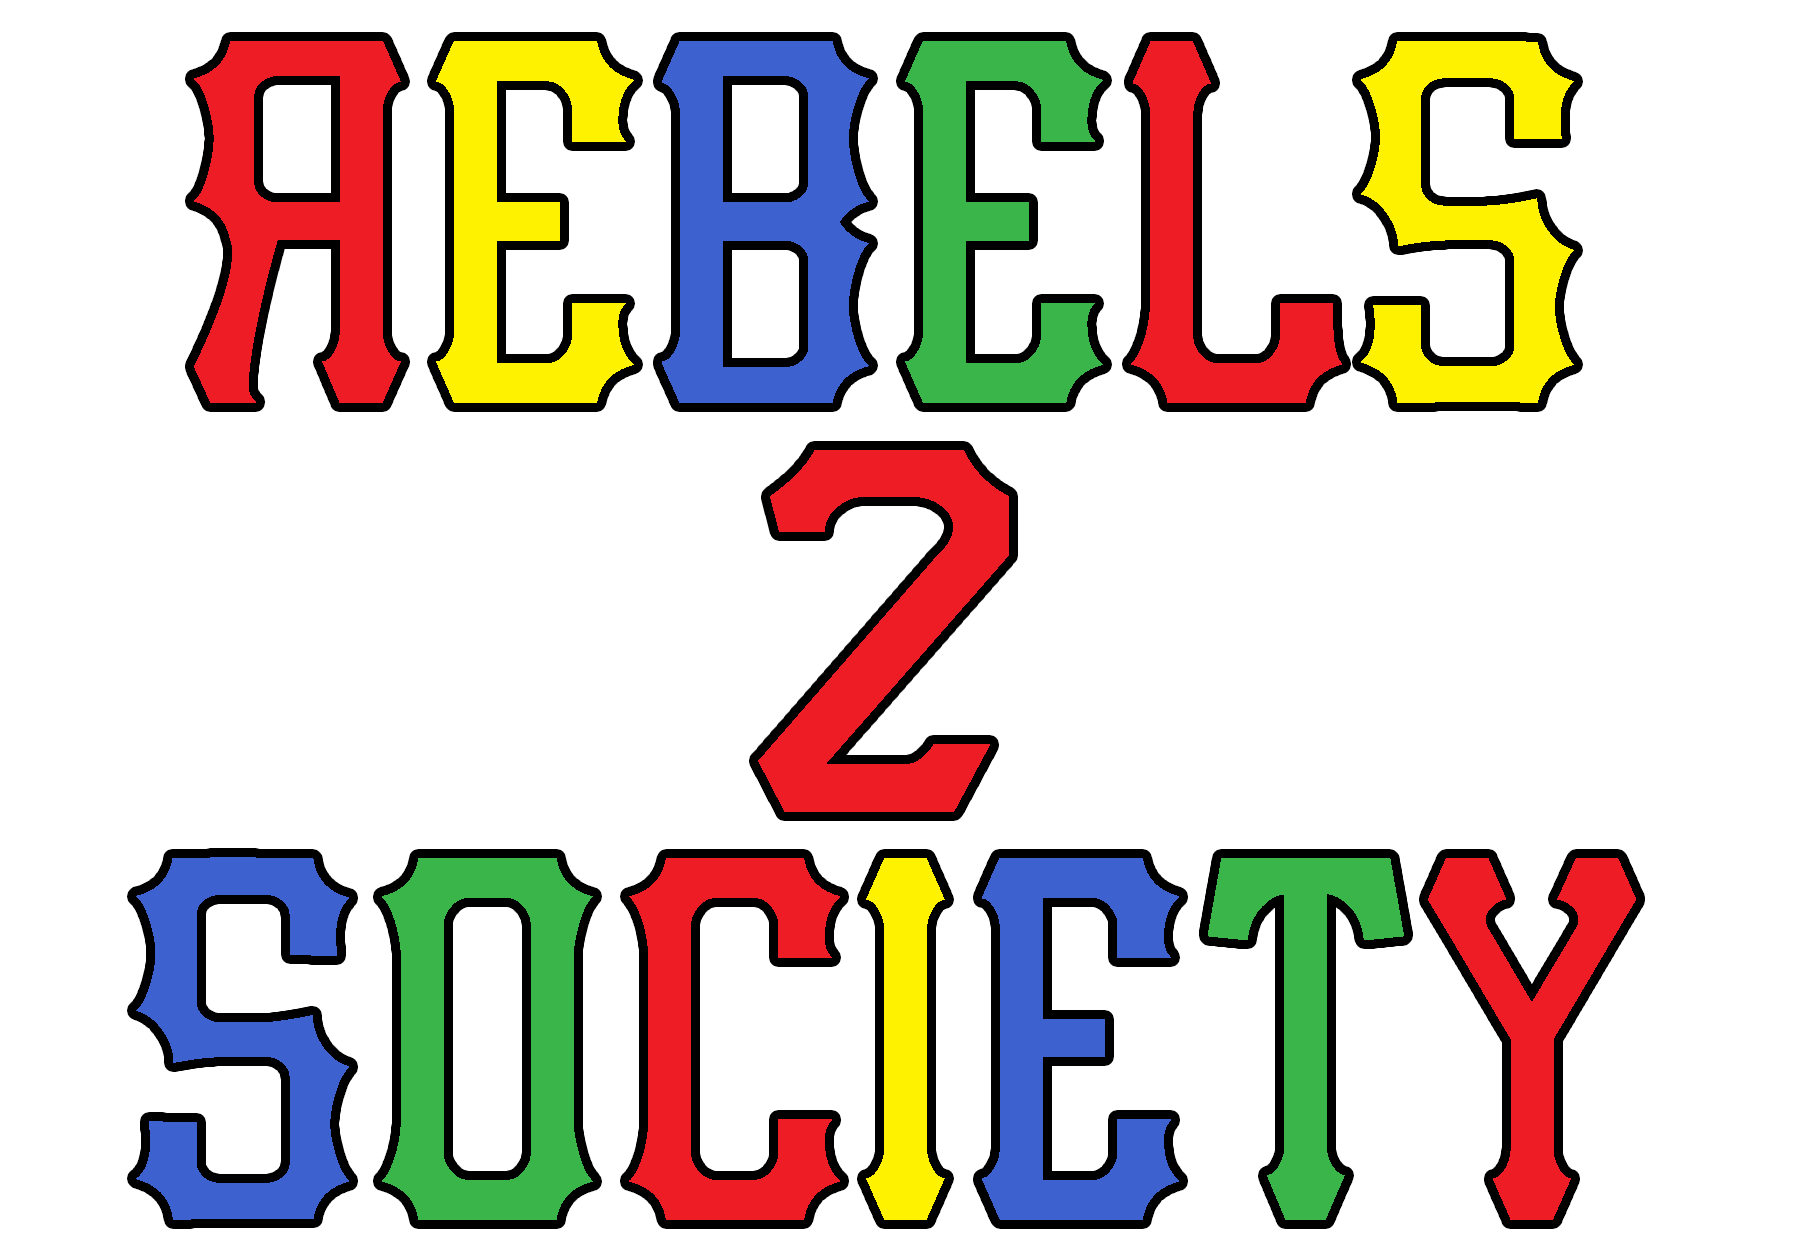 Rebels2Society